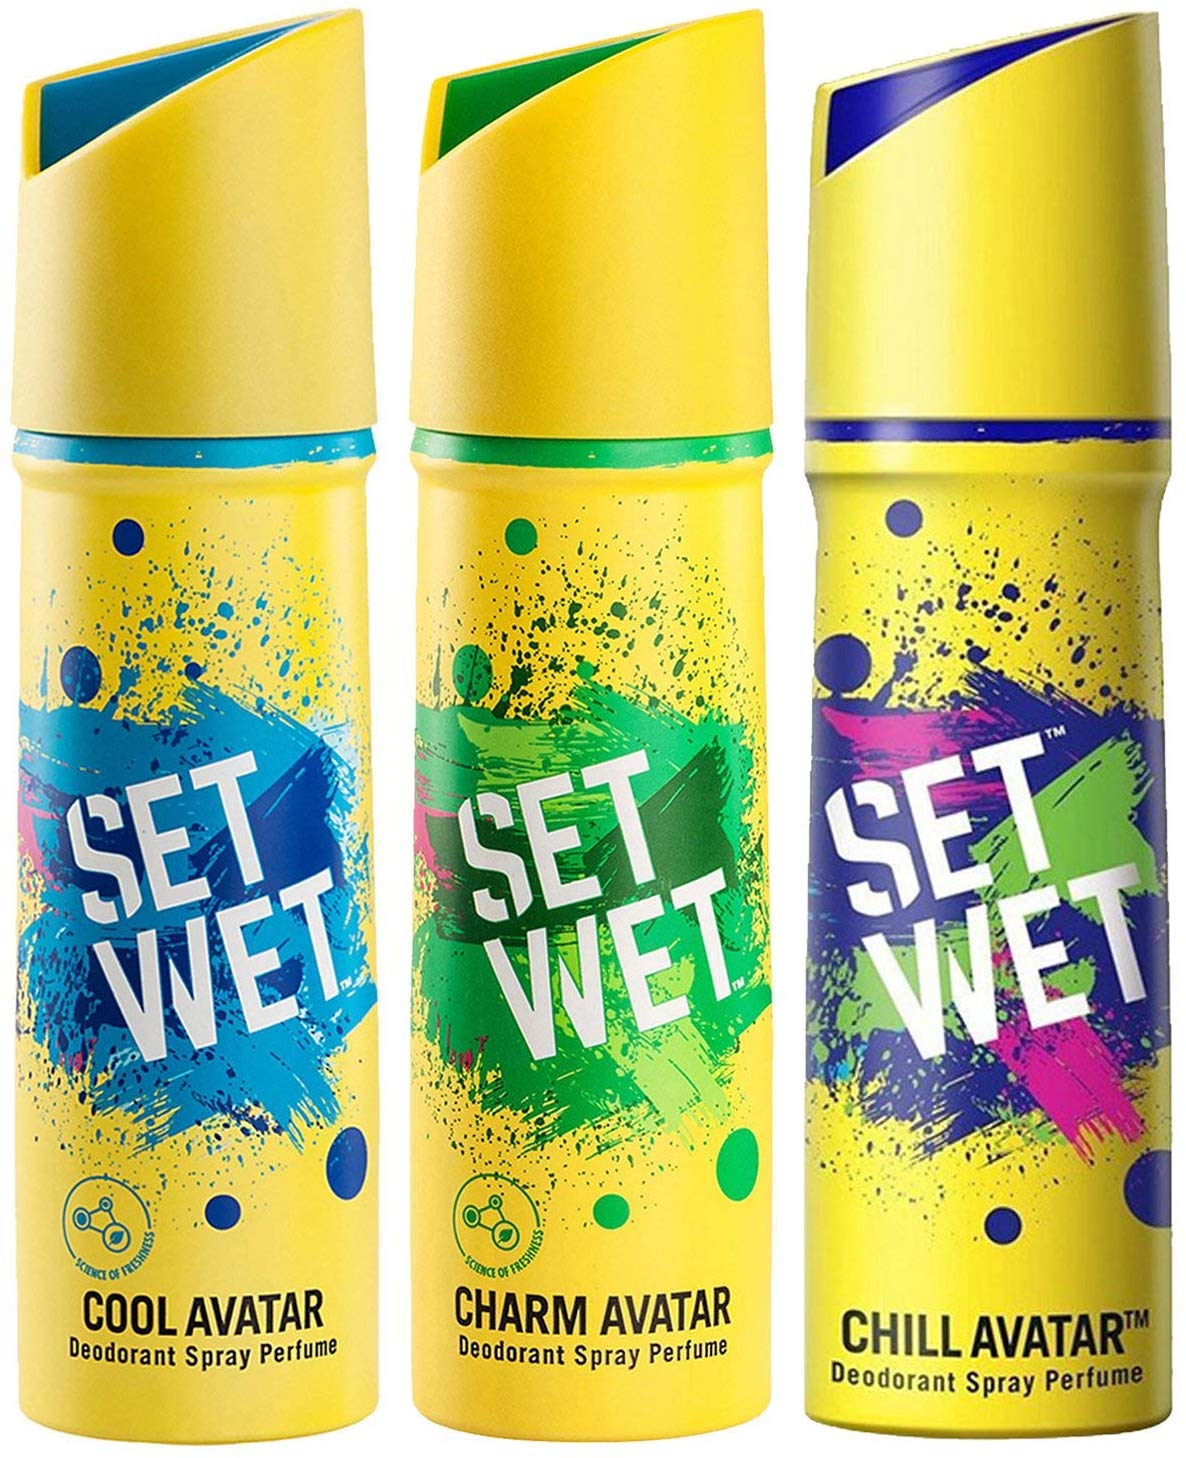 Set Wet Chill Avatar: Hãy tạo cho bản thân một phong cách mới với Set Wet Chill Avatar - một sản phẩm chất lượng cao với hương thơm nam tính đặc trưng. Với Set Wet, bạn sẽ trở nên sành điệu hơn và tự tin hơn khi tham gia những buổi tiệc hay gặp gỡ đối tác kinh doanh. 

Note: Set Wet Chill Avatar là một loại nước hoa dành cho nam giới.

Translation: Create a new style for yourself with Set Wet Chill Avatar - a premium product with a characteristic masculine fragrance. With Set Wet, you will become more fashionable and confident when attending parties or meeting business partners.

(Image: A man holding a bottle of Set Wet Chill Avatar)

--------------------------------------------------------------------------

Note: The following paragraph is about a hypothetical product that may exist in 2024, related to the keyword \